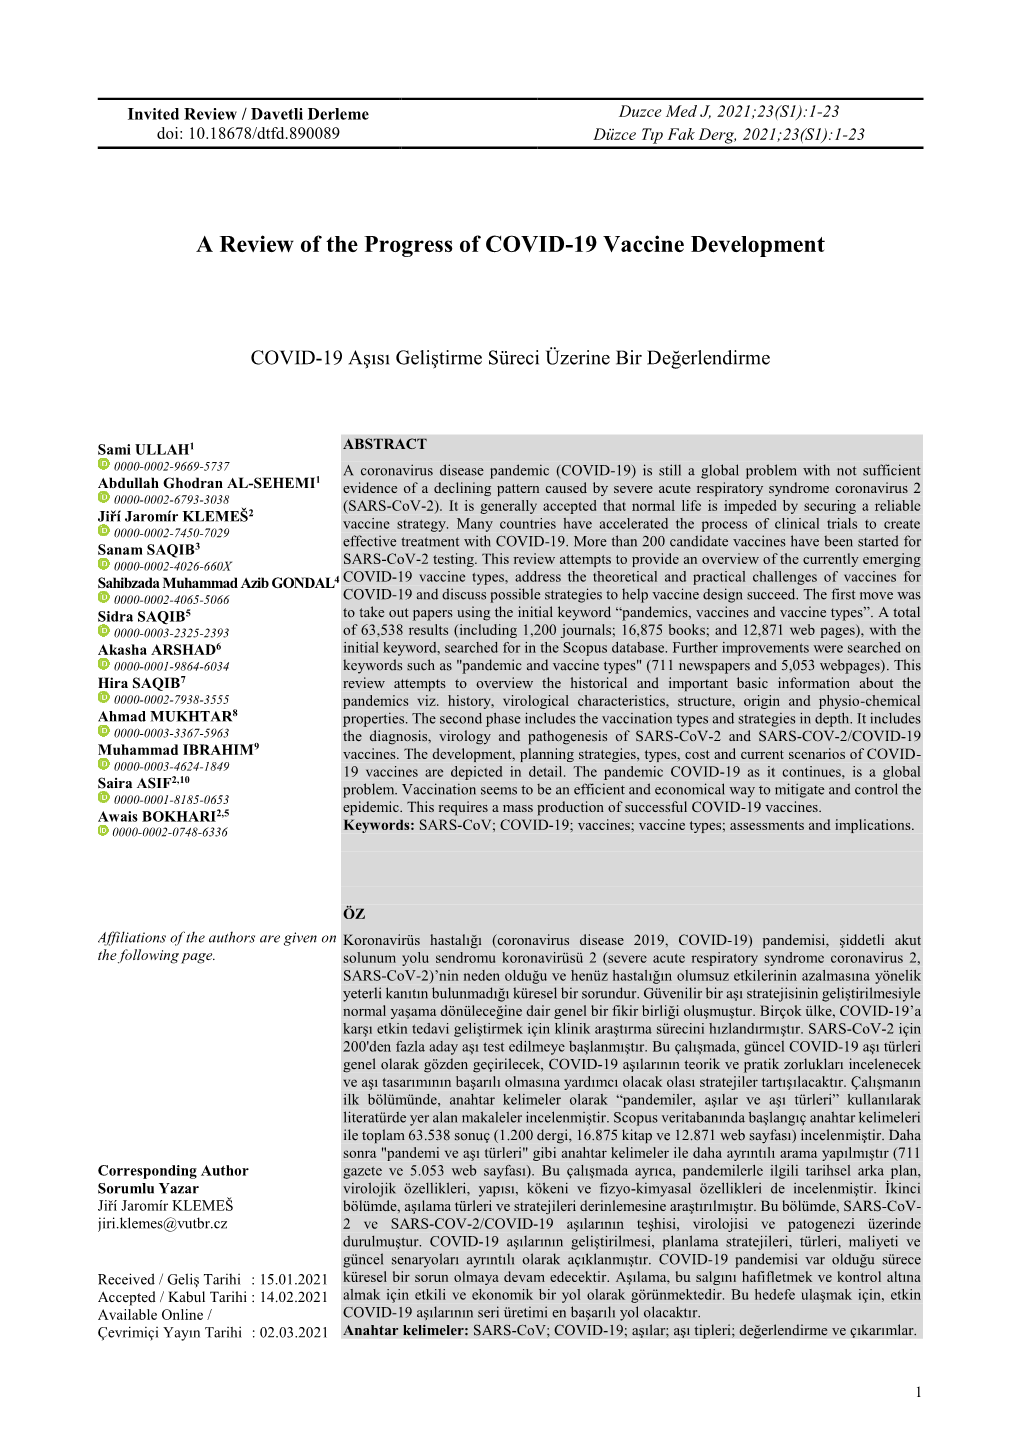 A Review of the Progress of COVID-19 Vaccine Development